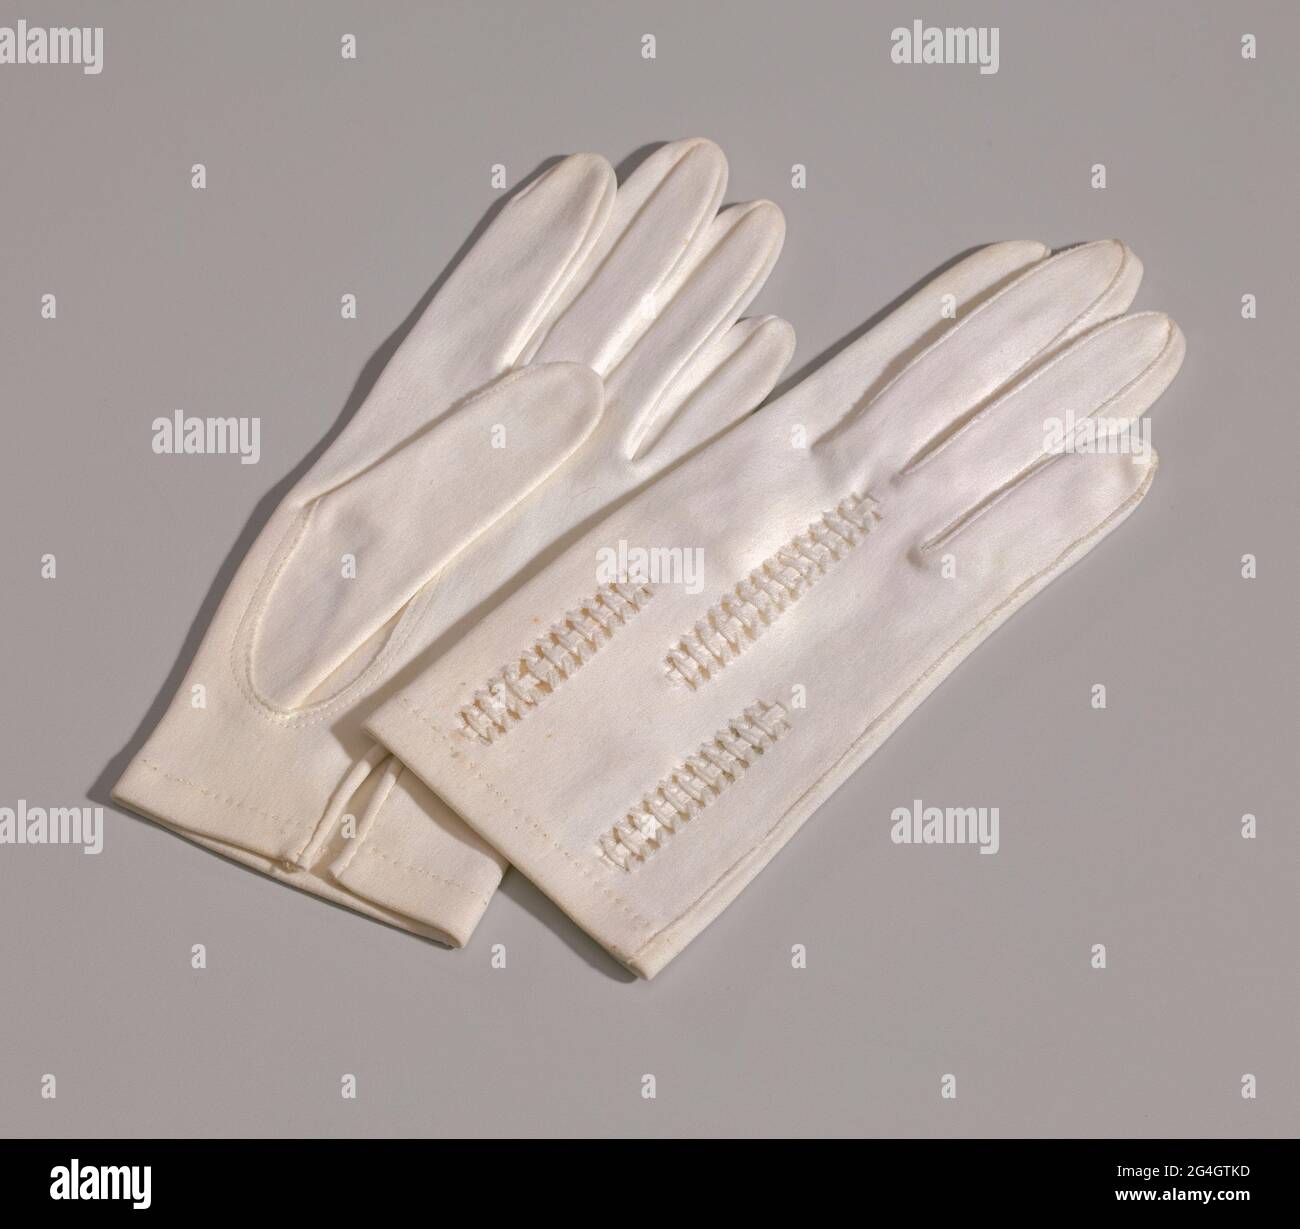 Fabricantes de guantes fotografías e imágenes de alta resolución - Alamy